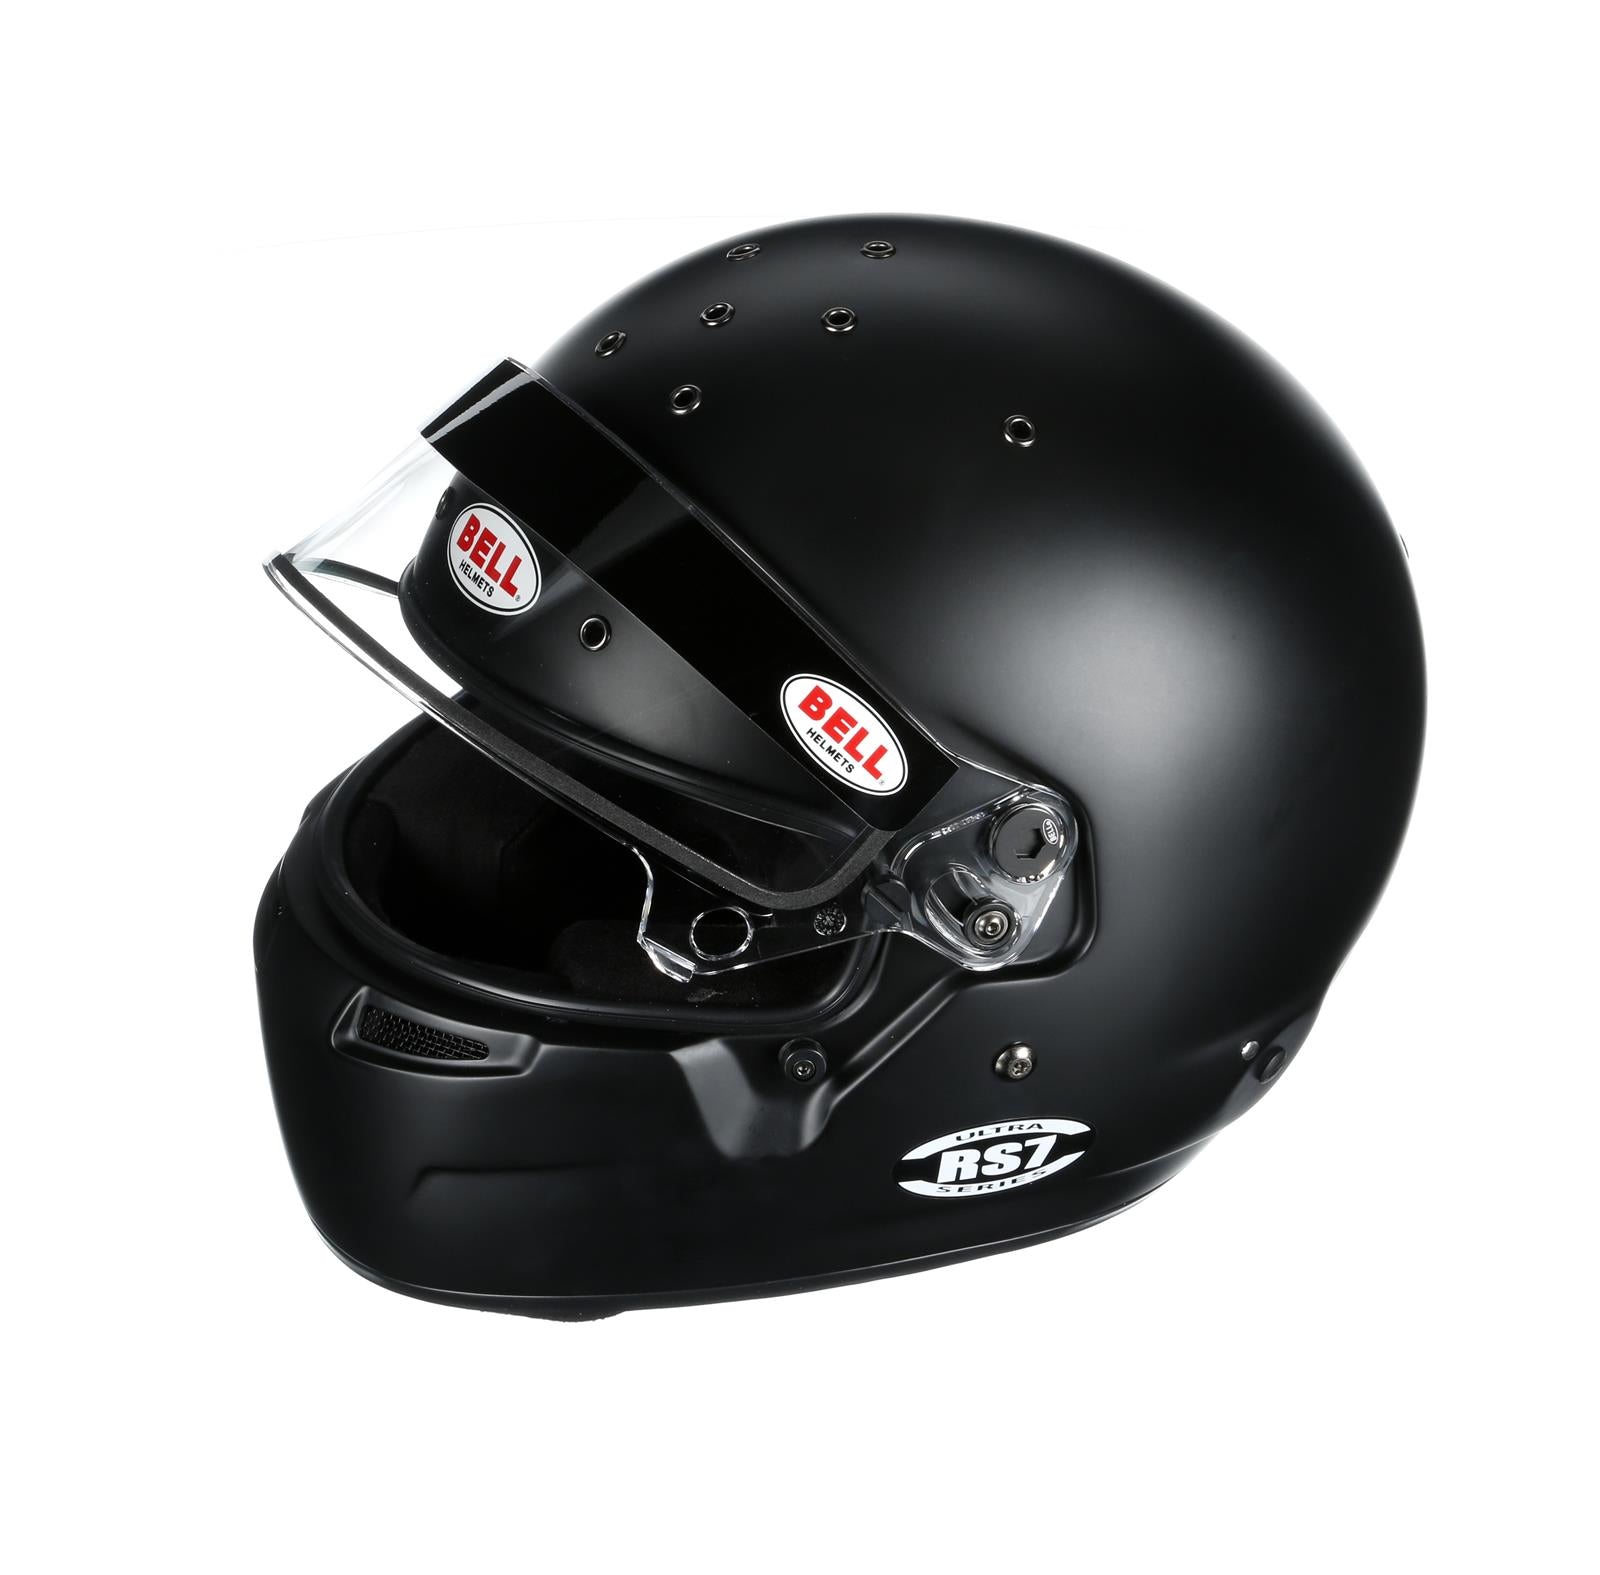 BELL 1310019 Racing helmet RS7 MATTE BLACK, SA2015/FIA8859, HANS, size 61+ (7 5/8+) Photo-5 